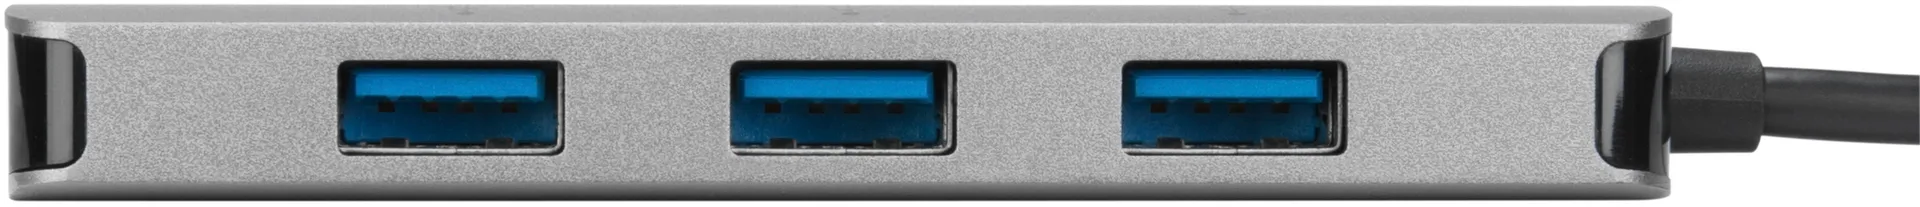 Targus  USB-C hubi 4-porttinen ACH226EU - 2